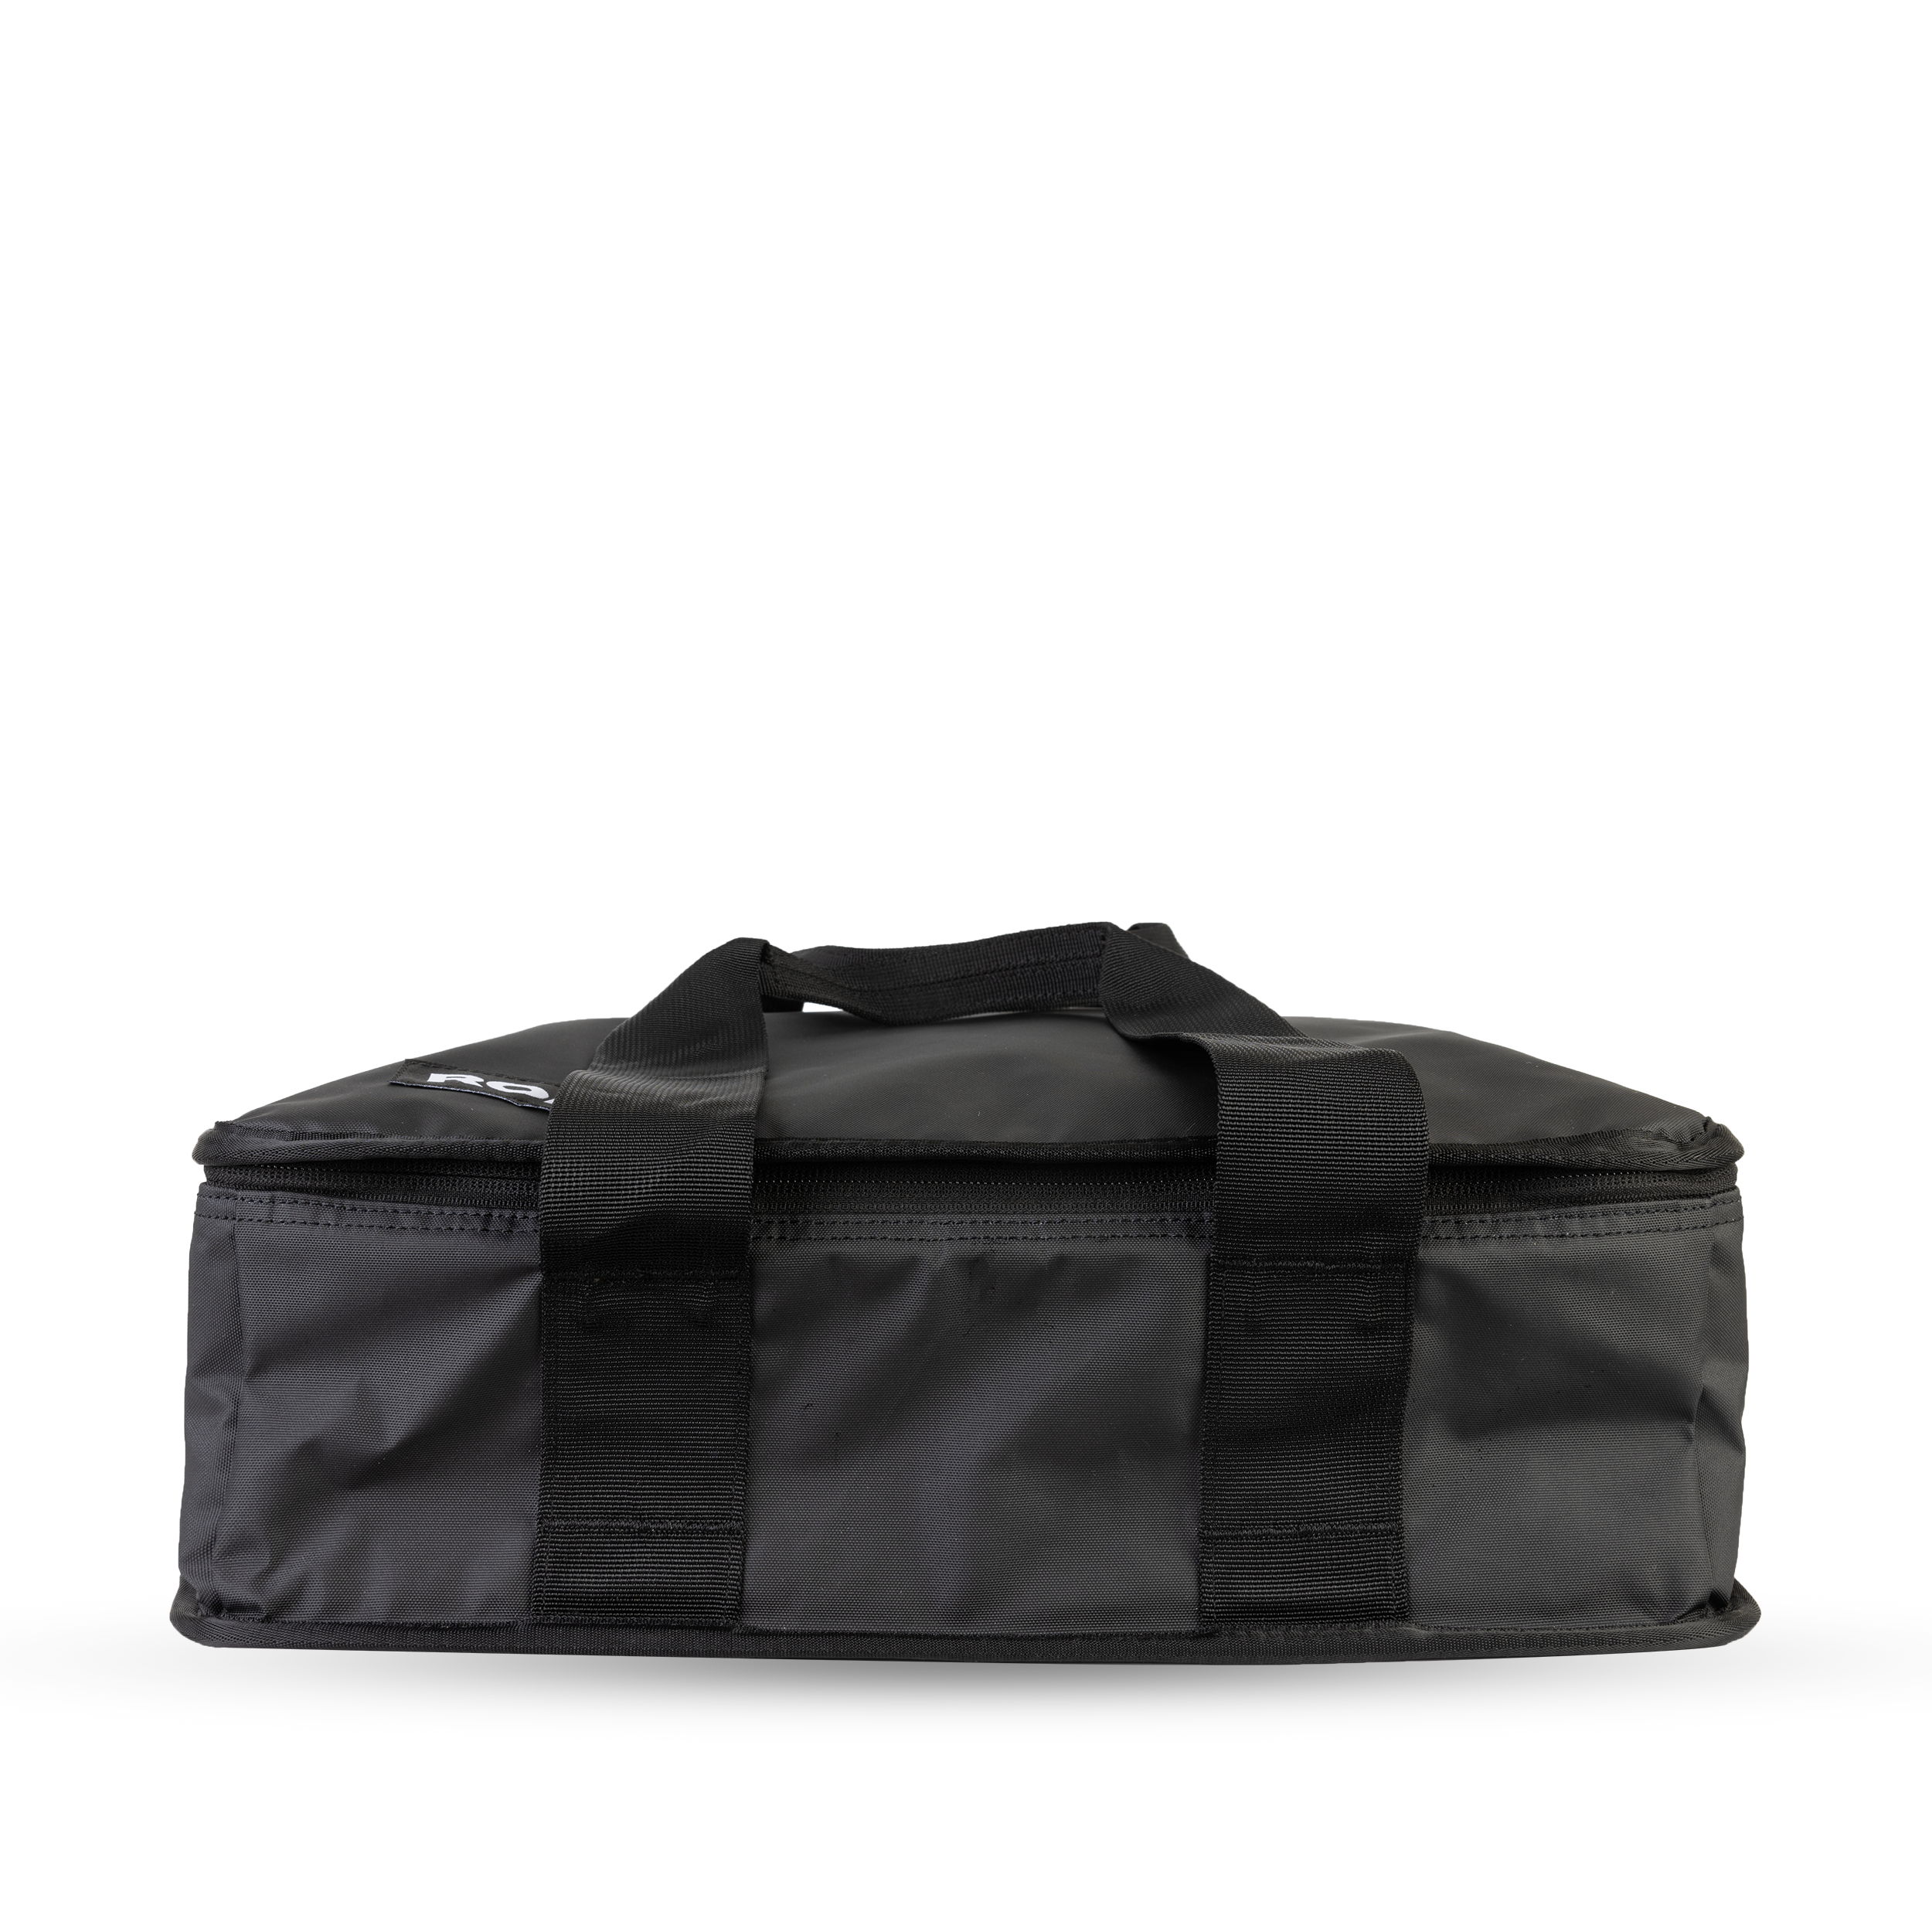 ROAM Rugged Bag 2.1